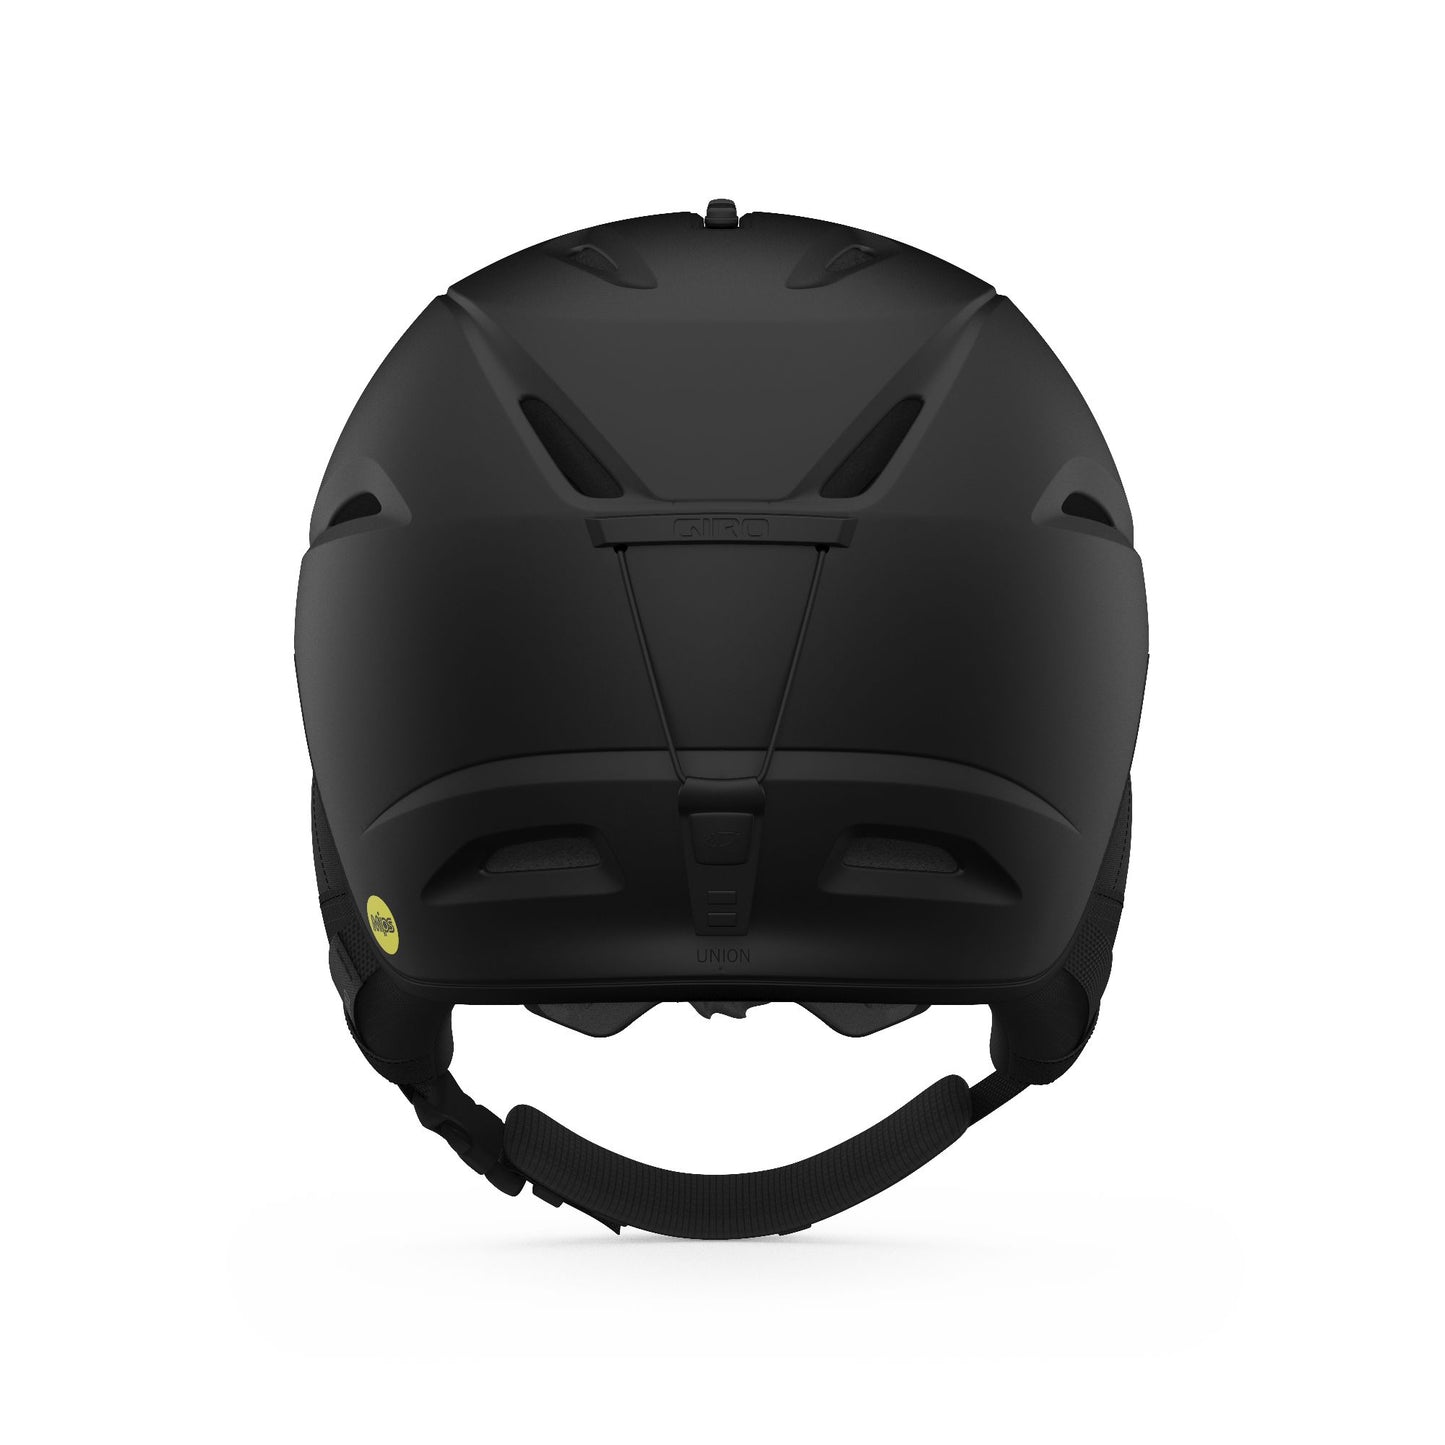 Giro Union MIPS Helmet Matte Black Snow Helmets